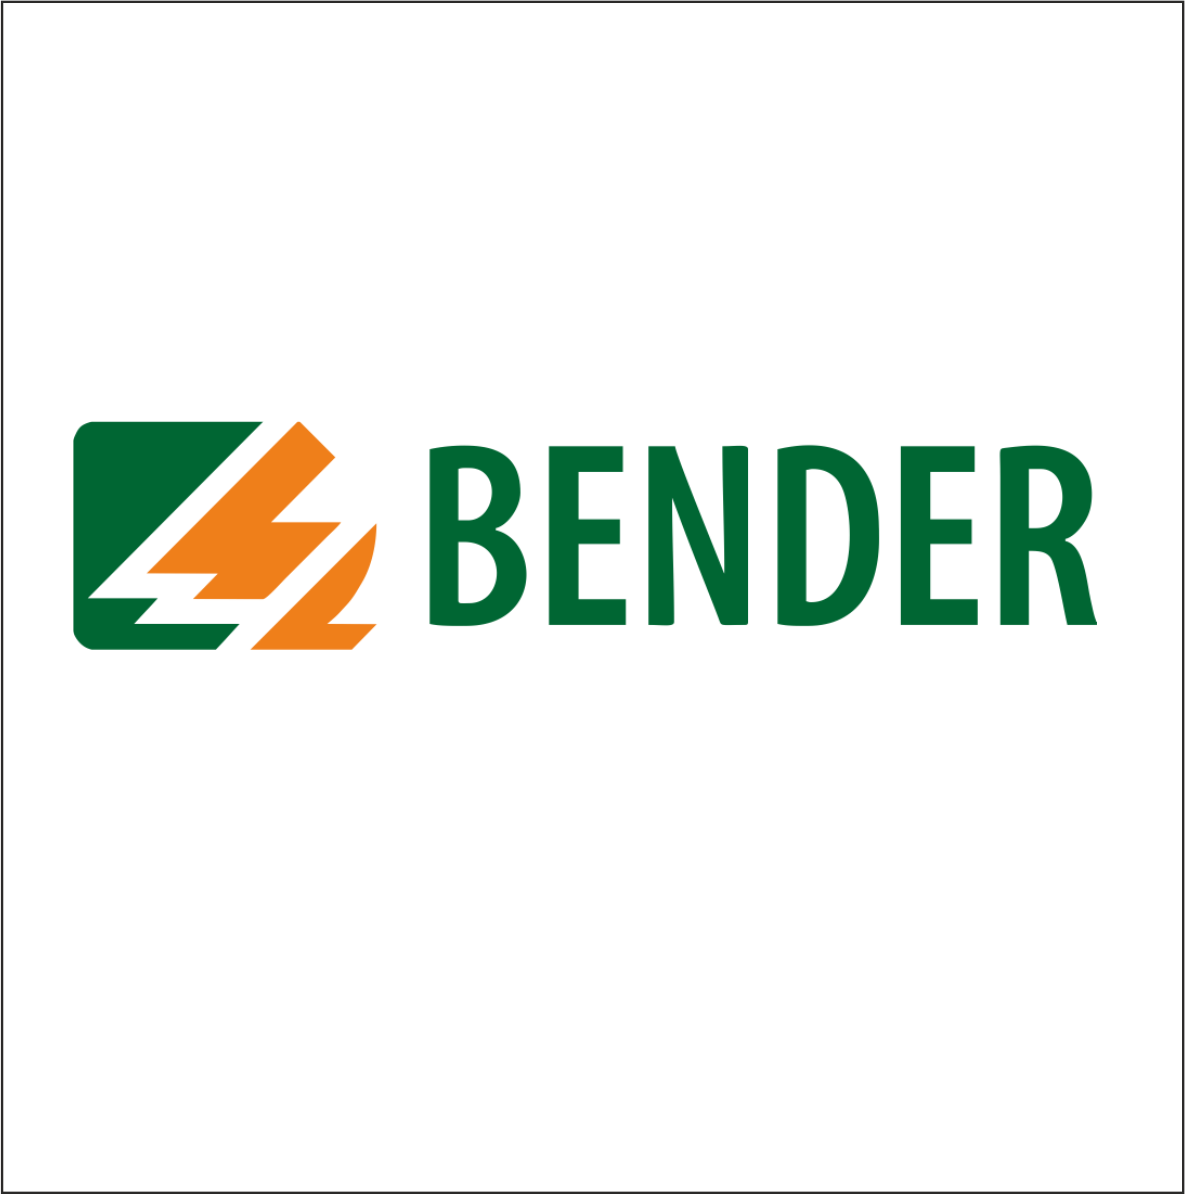 Bender GmbH